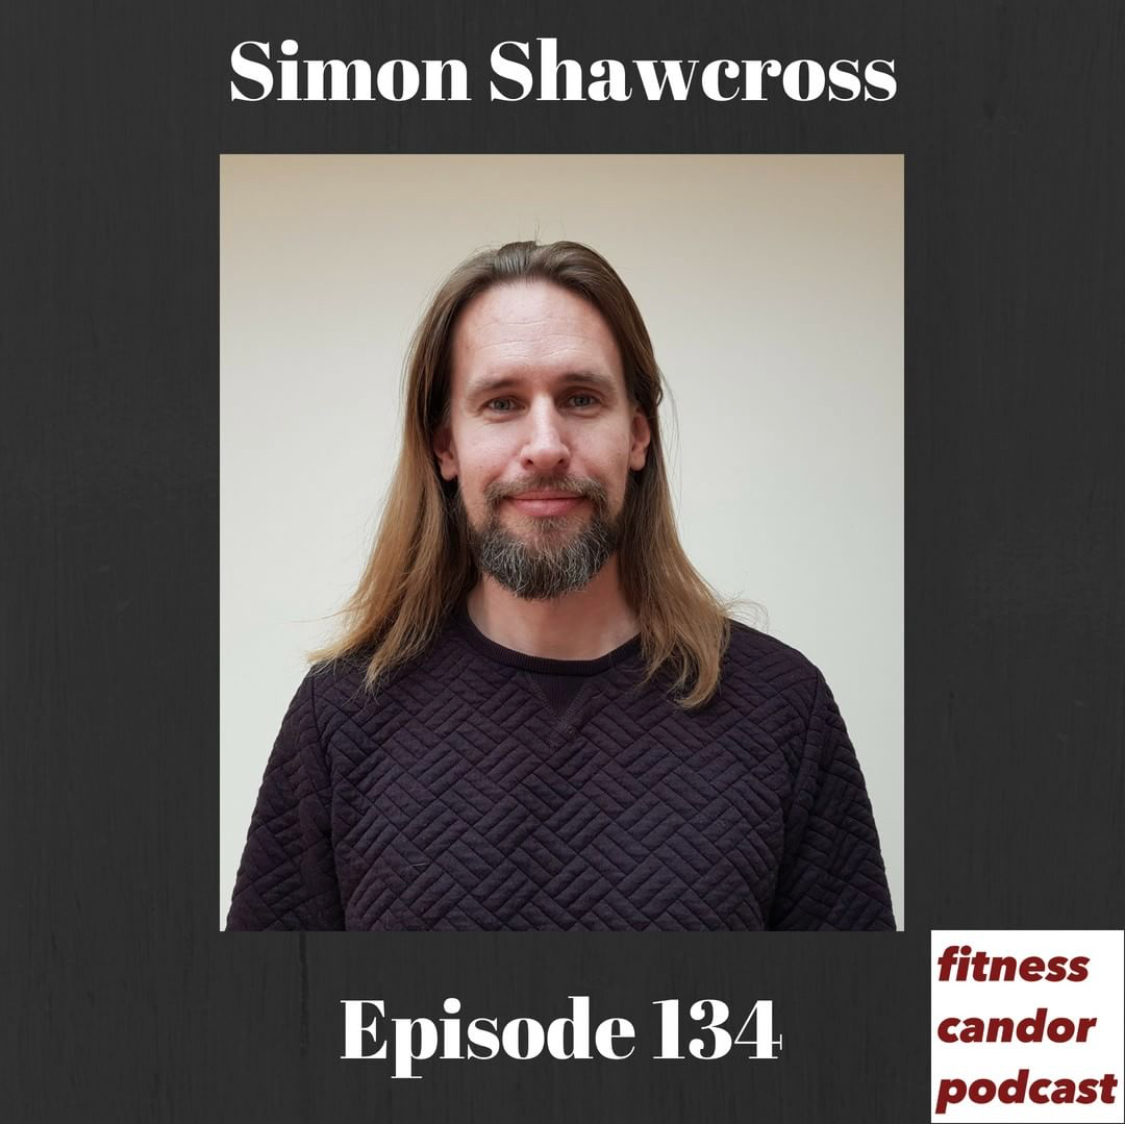 A Conversation with Simon Shawcross